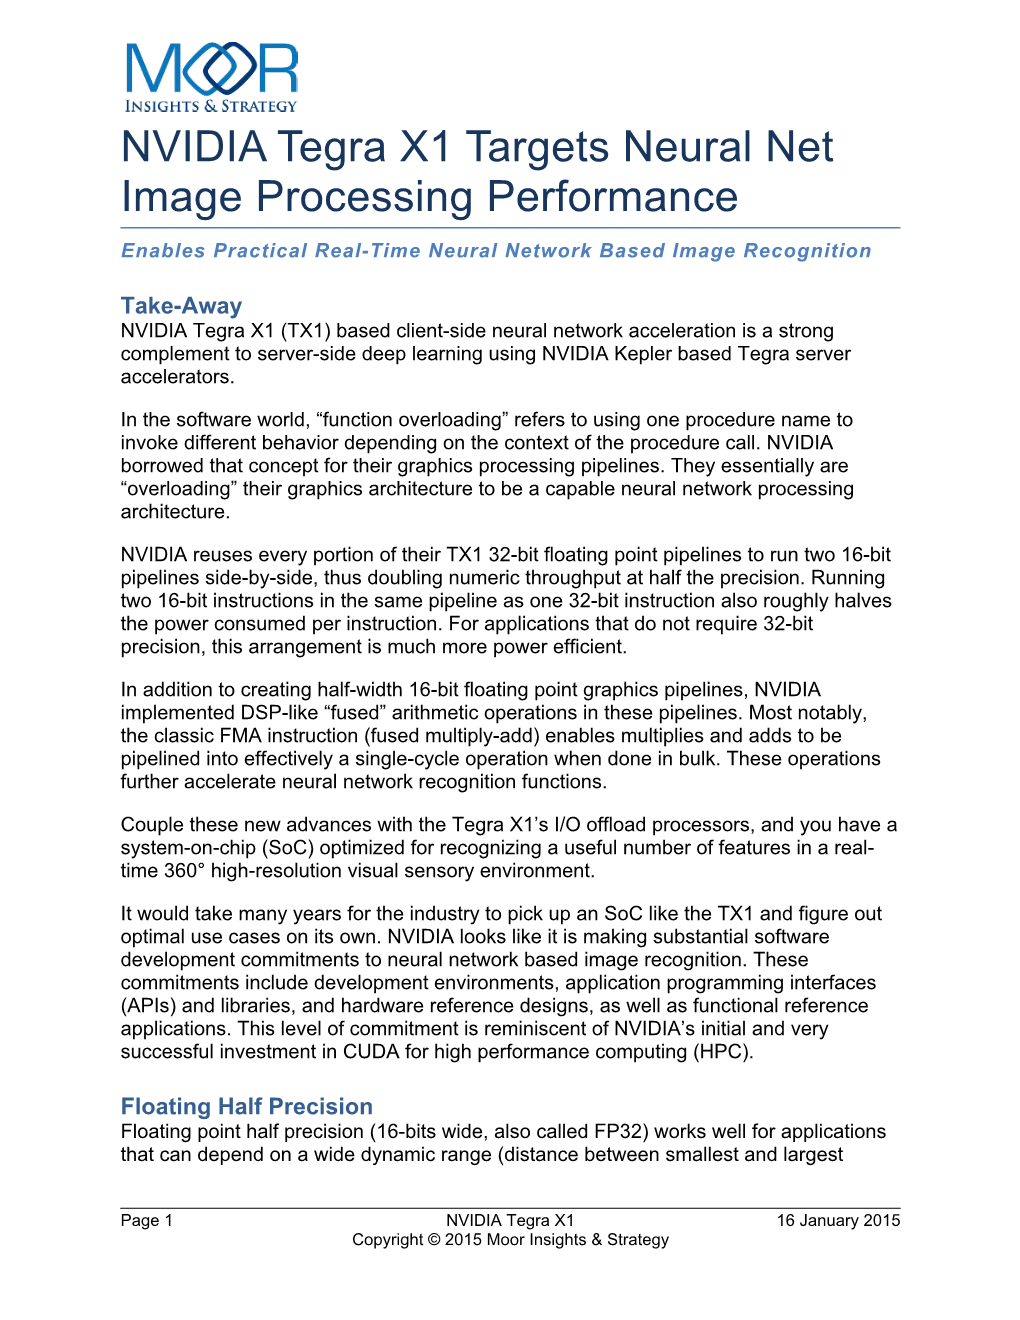 NVIDIA Tegra X1 Targets Neural Net Image Processing Performance